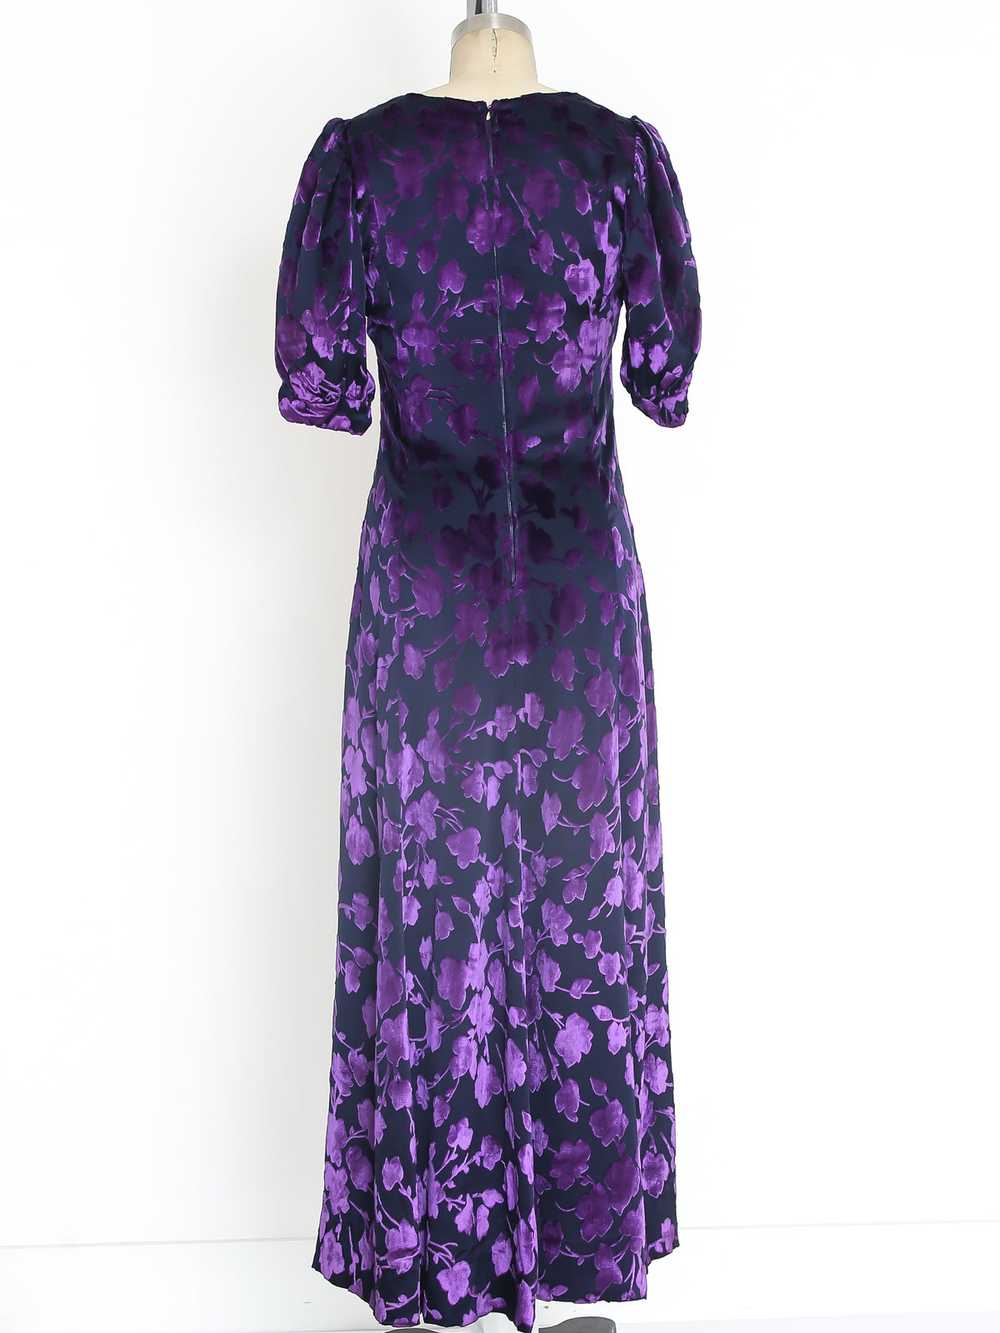 Yves Saint Laurent Amethyst Floral Dress - image 4